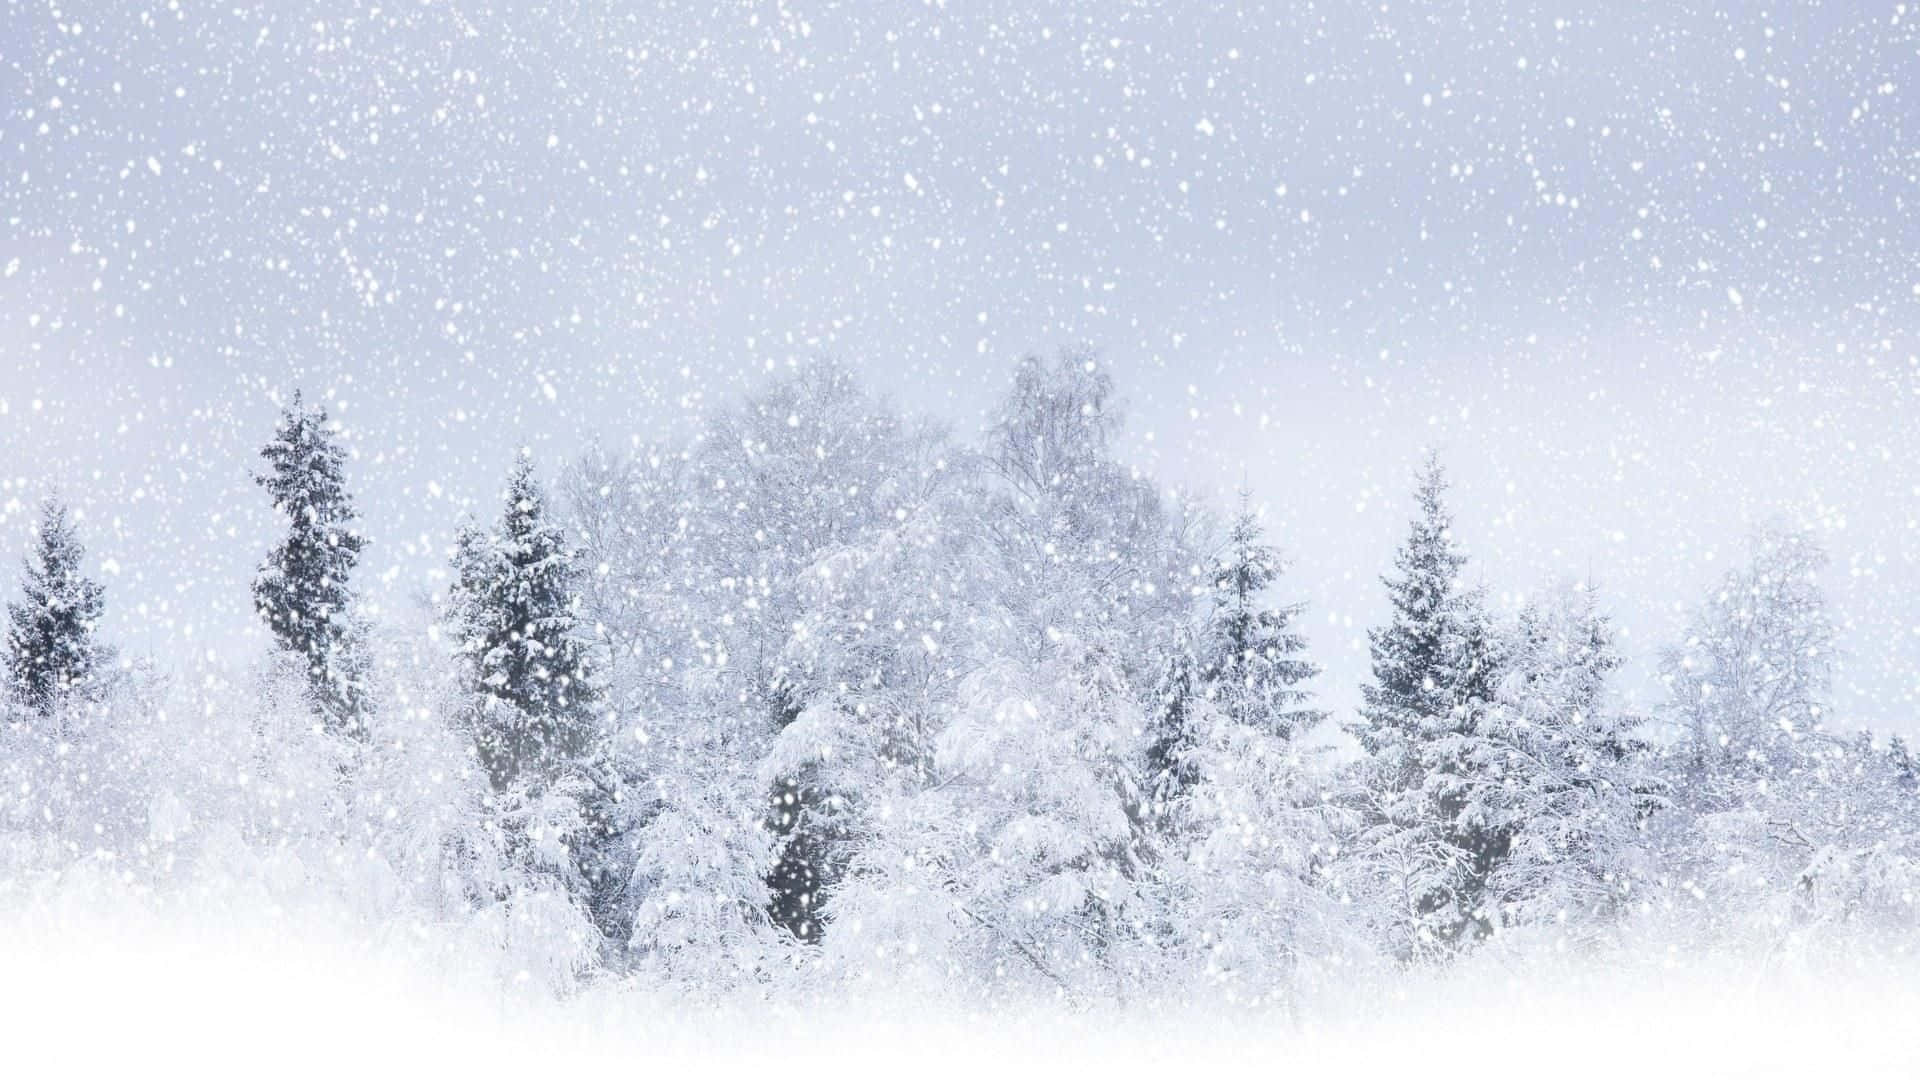 Take a trip to a winter wonderland.